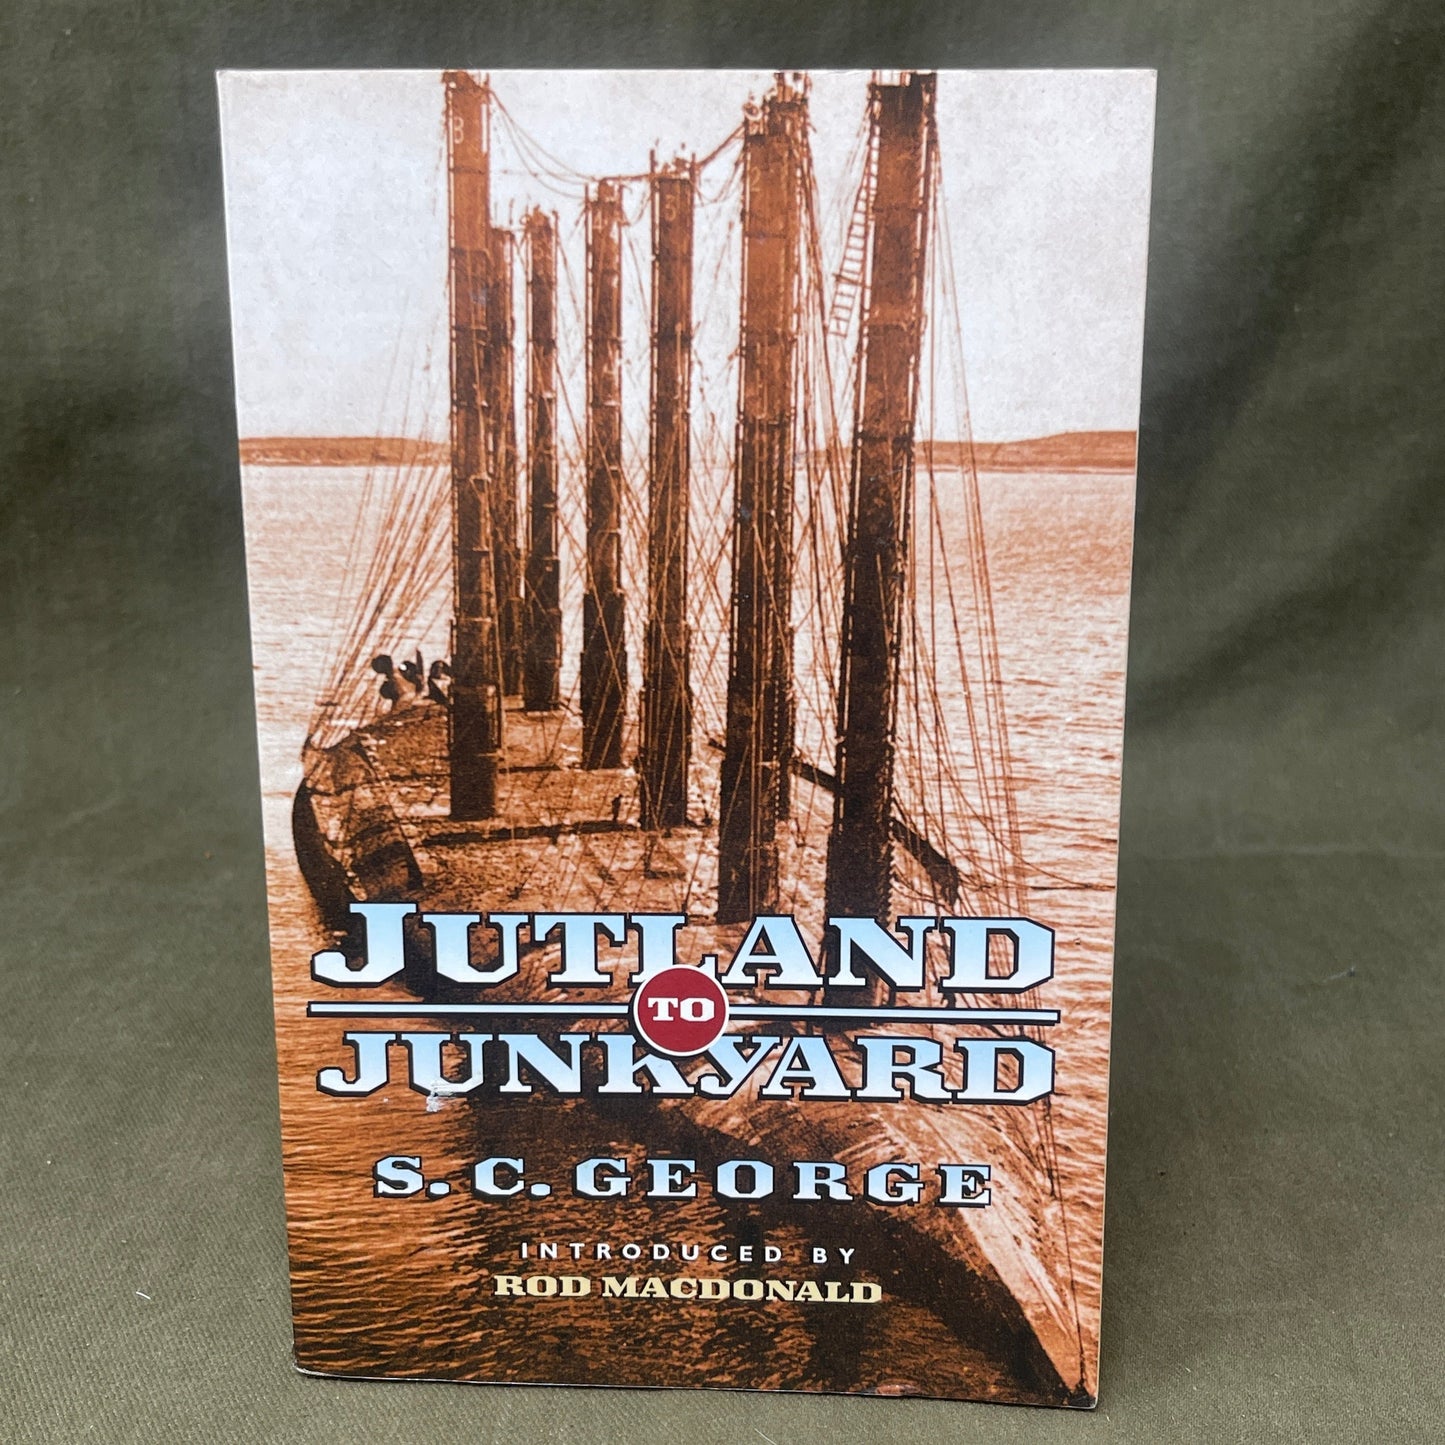 Jutland Junkyard by S C George